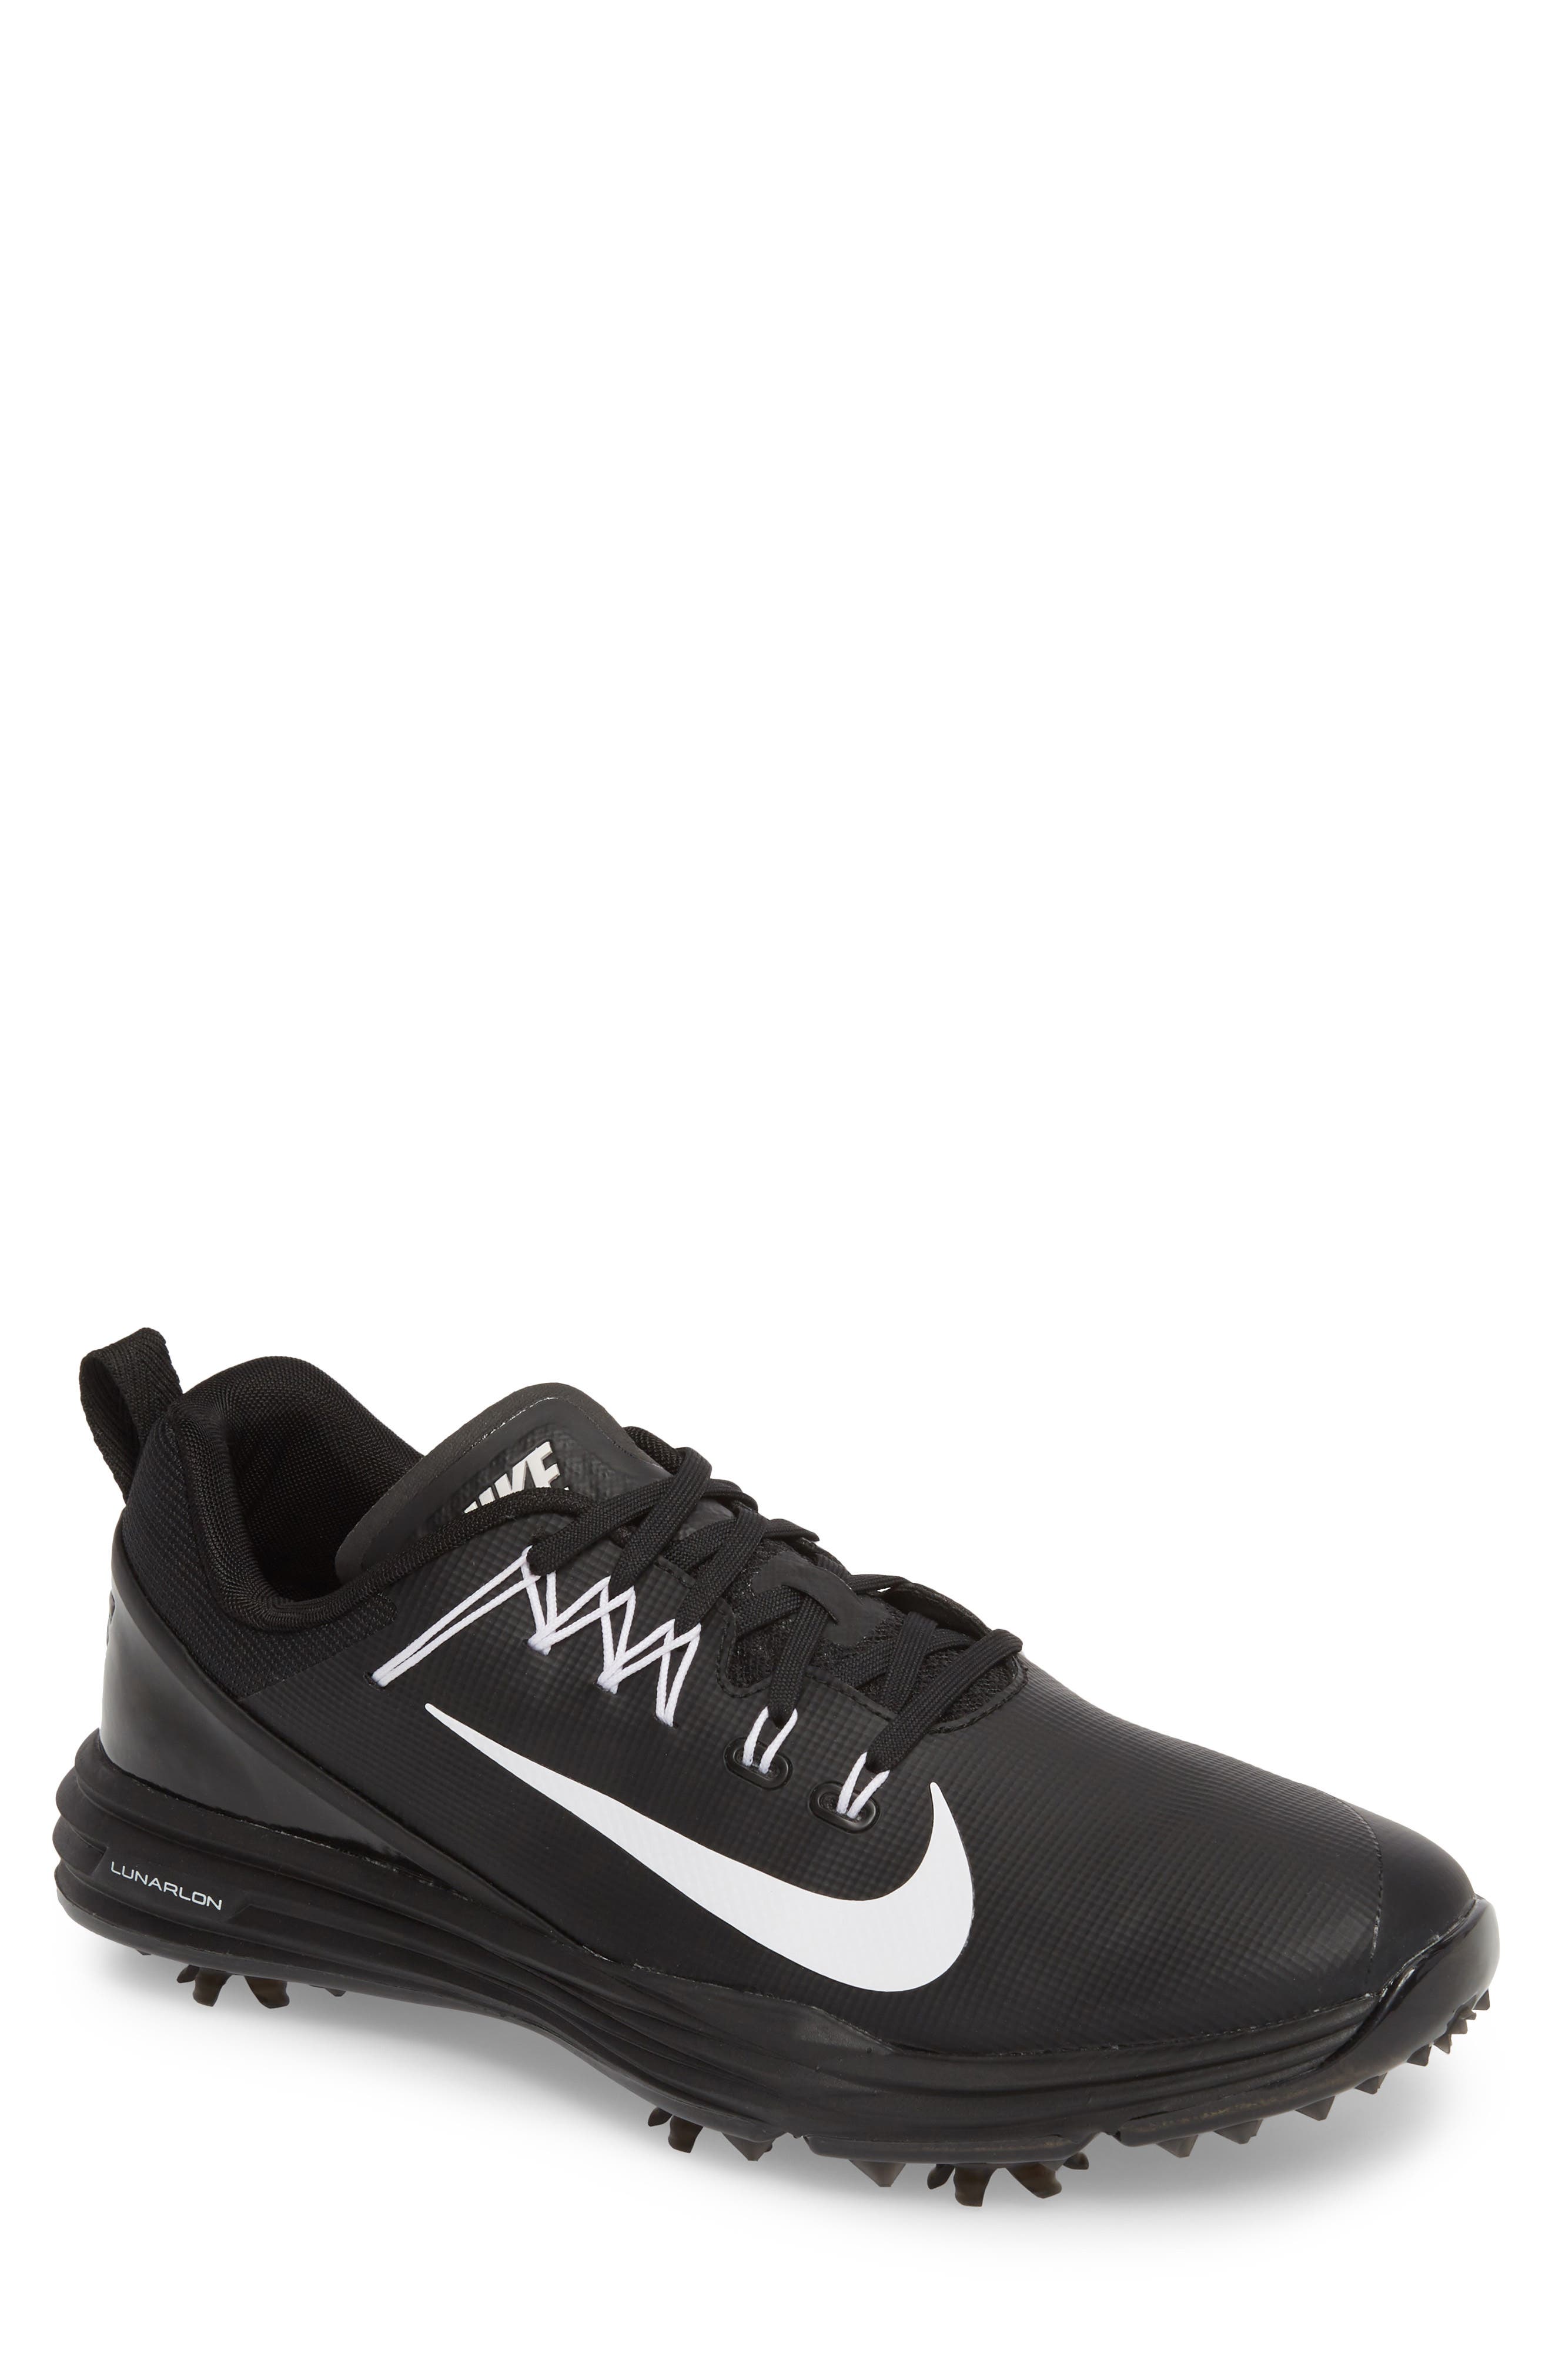 nike lunar command 2 golf shoes black